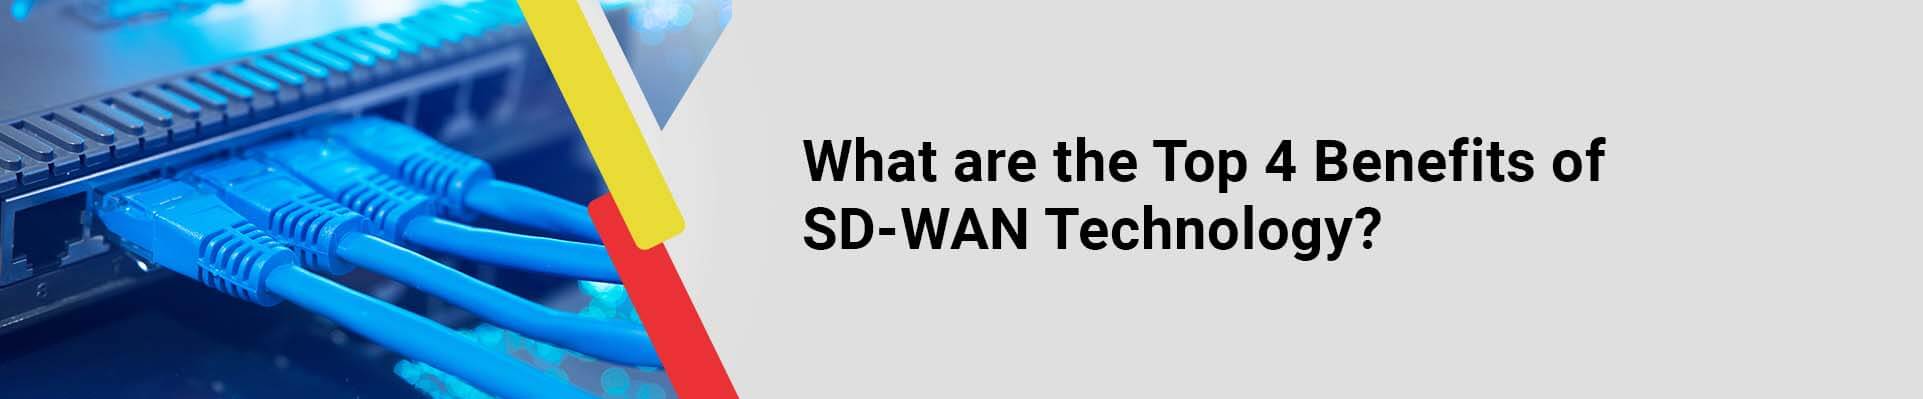 Benefits of SD-WAN Technology